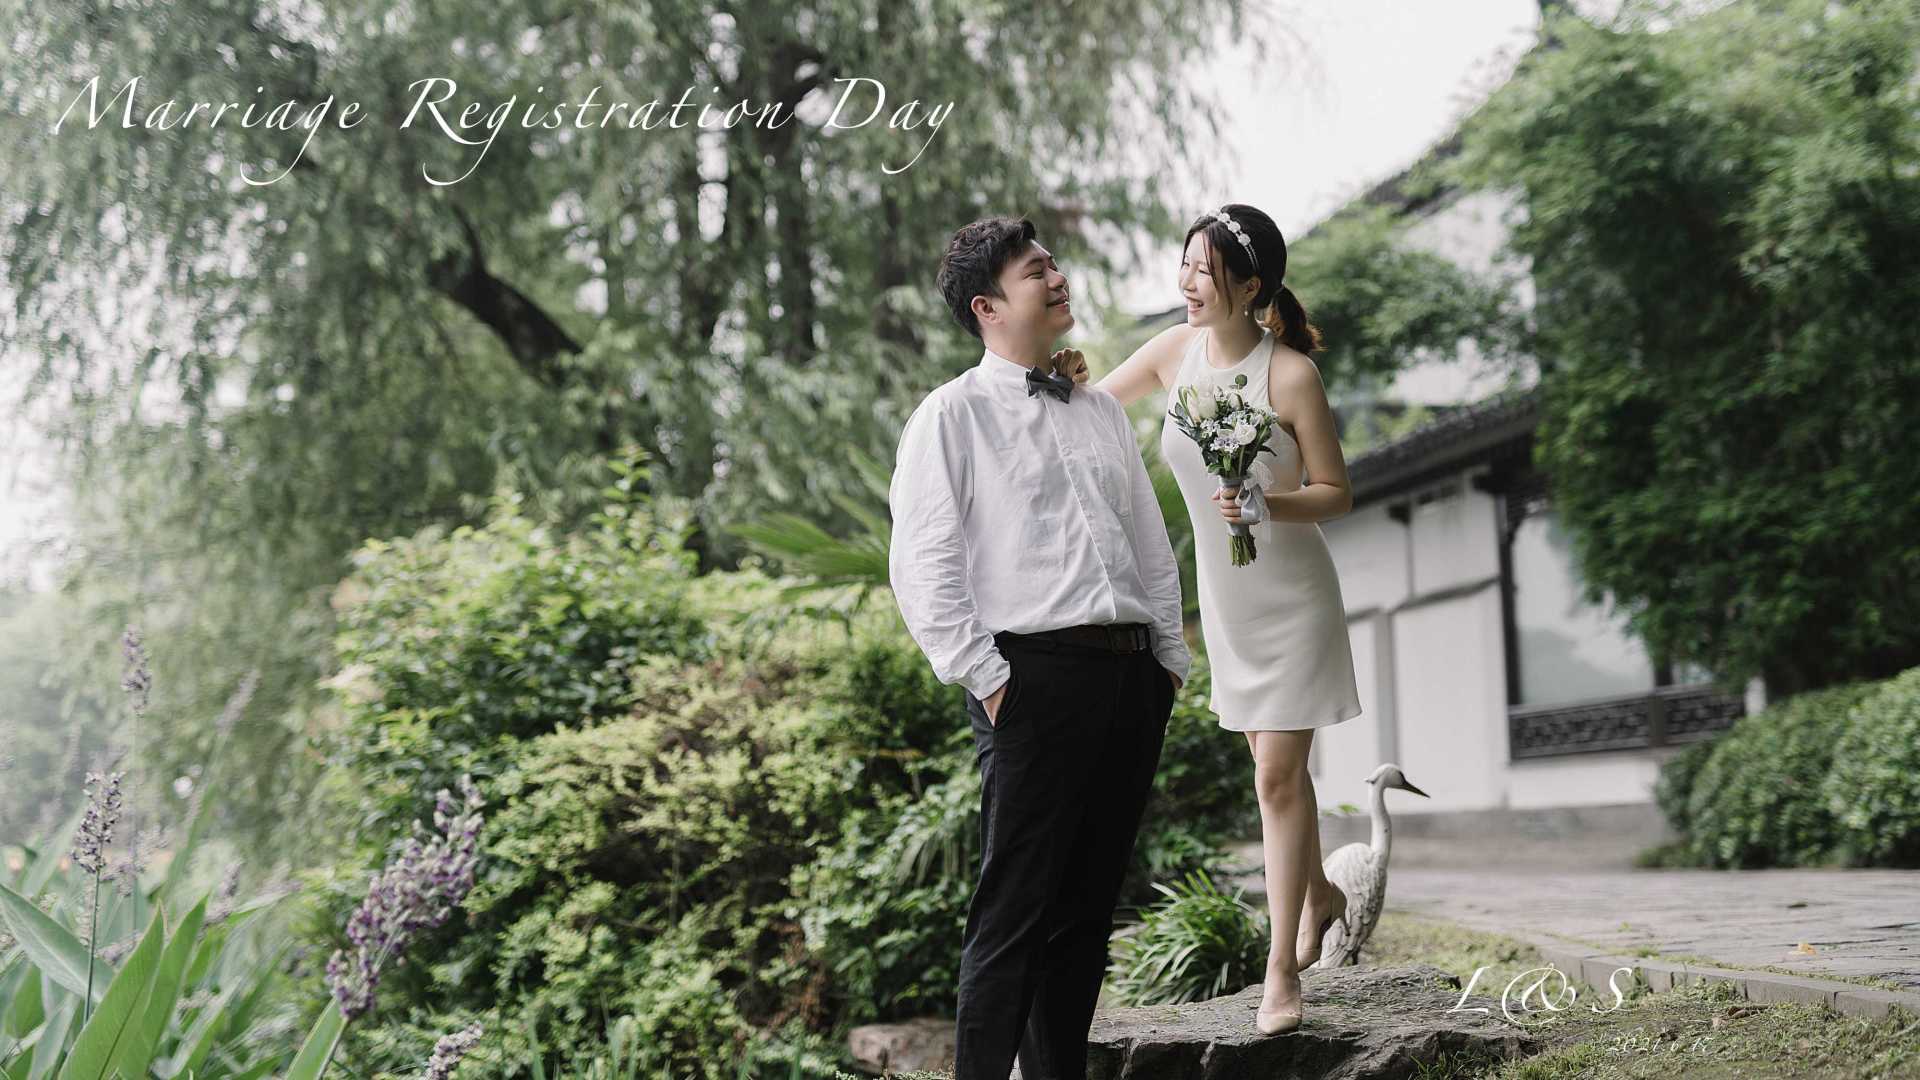 Li & Shen | Marriage Registration Day